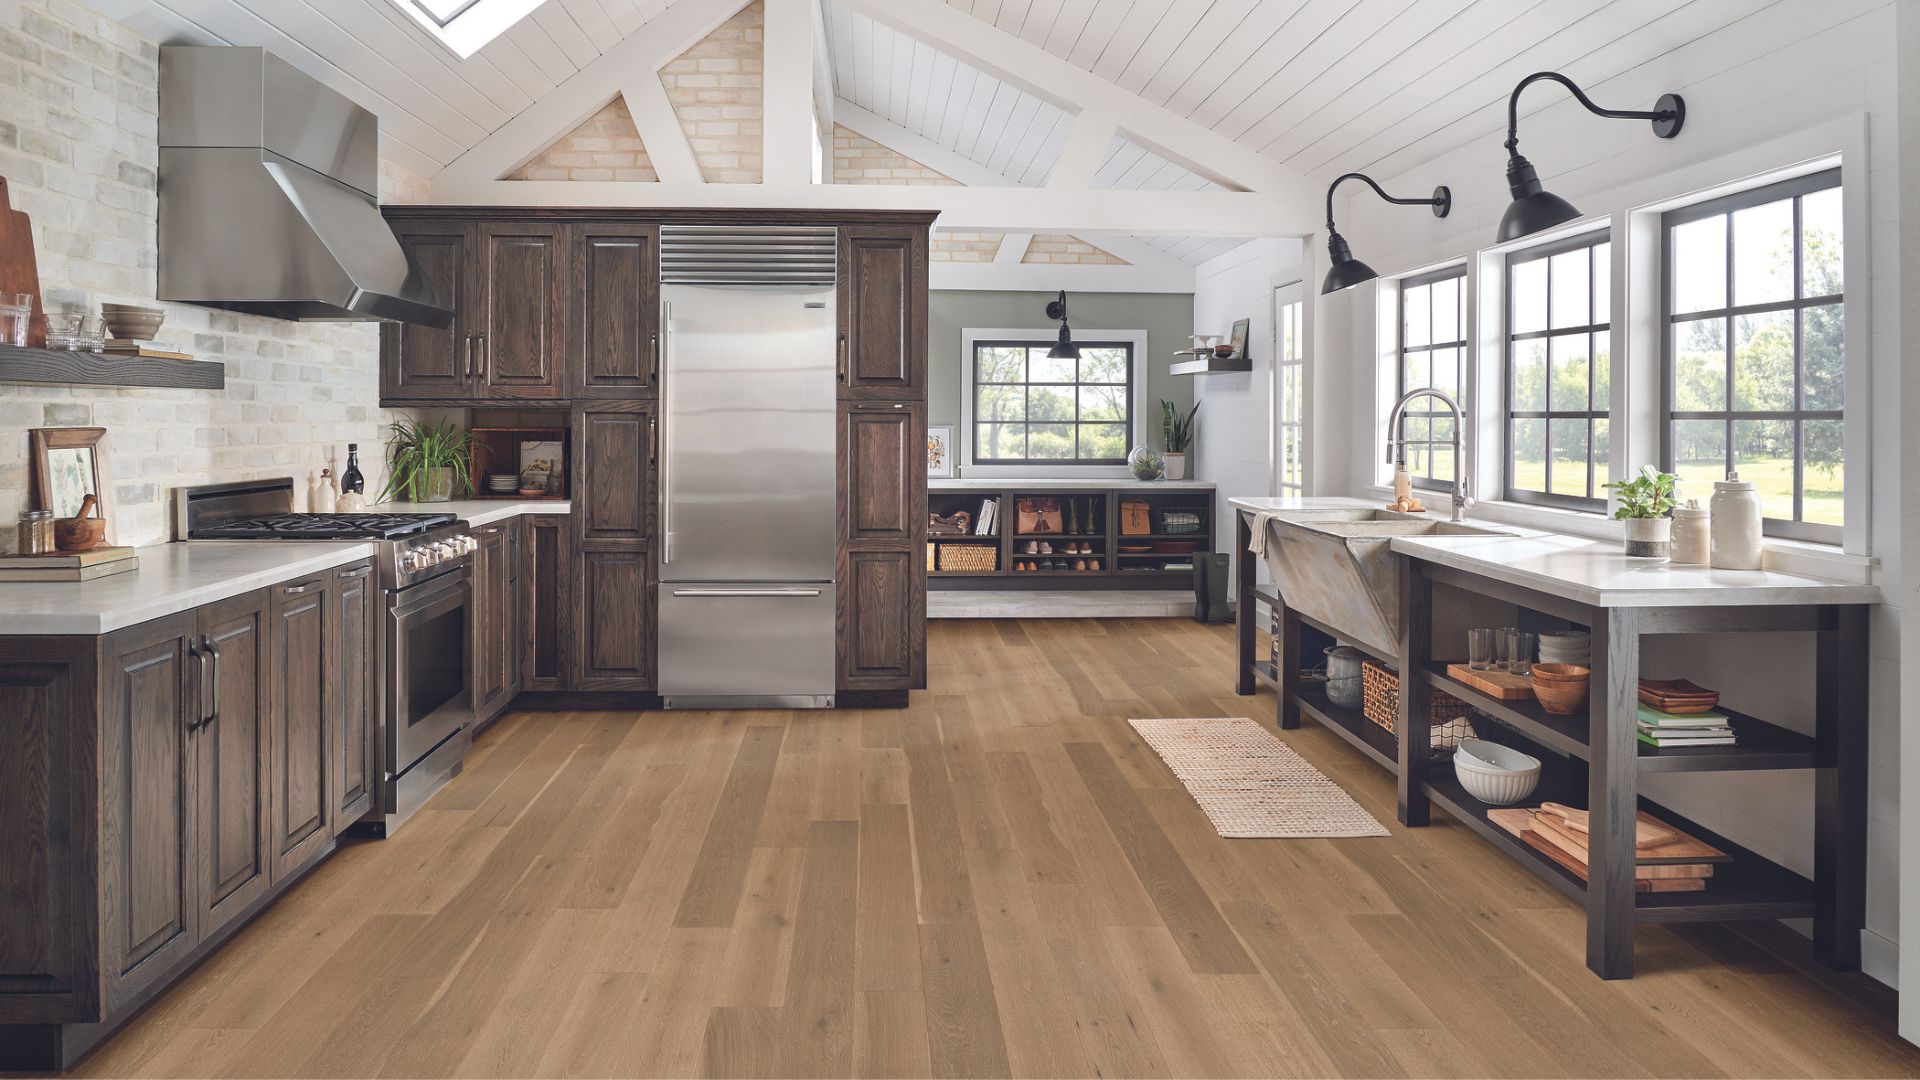 Luxury vinyl flooring in a rustic style kitchen.